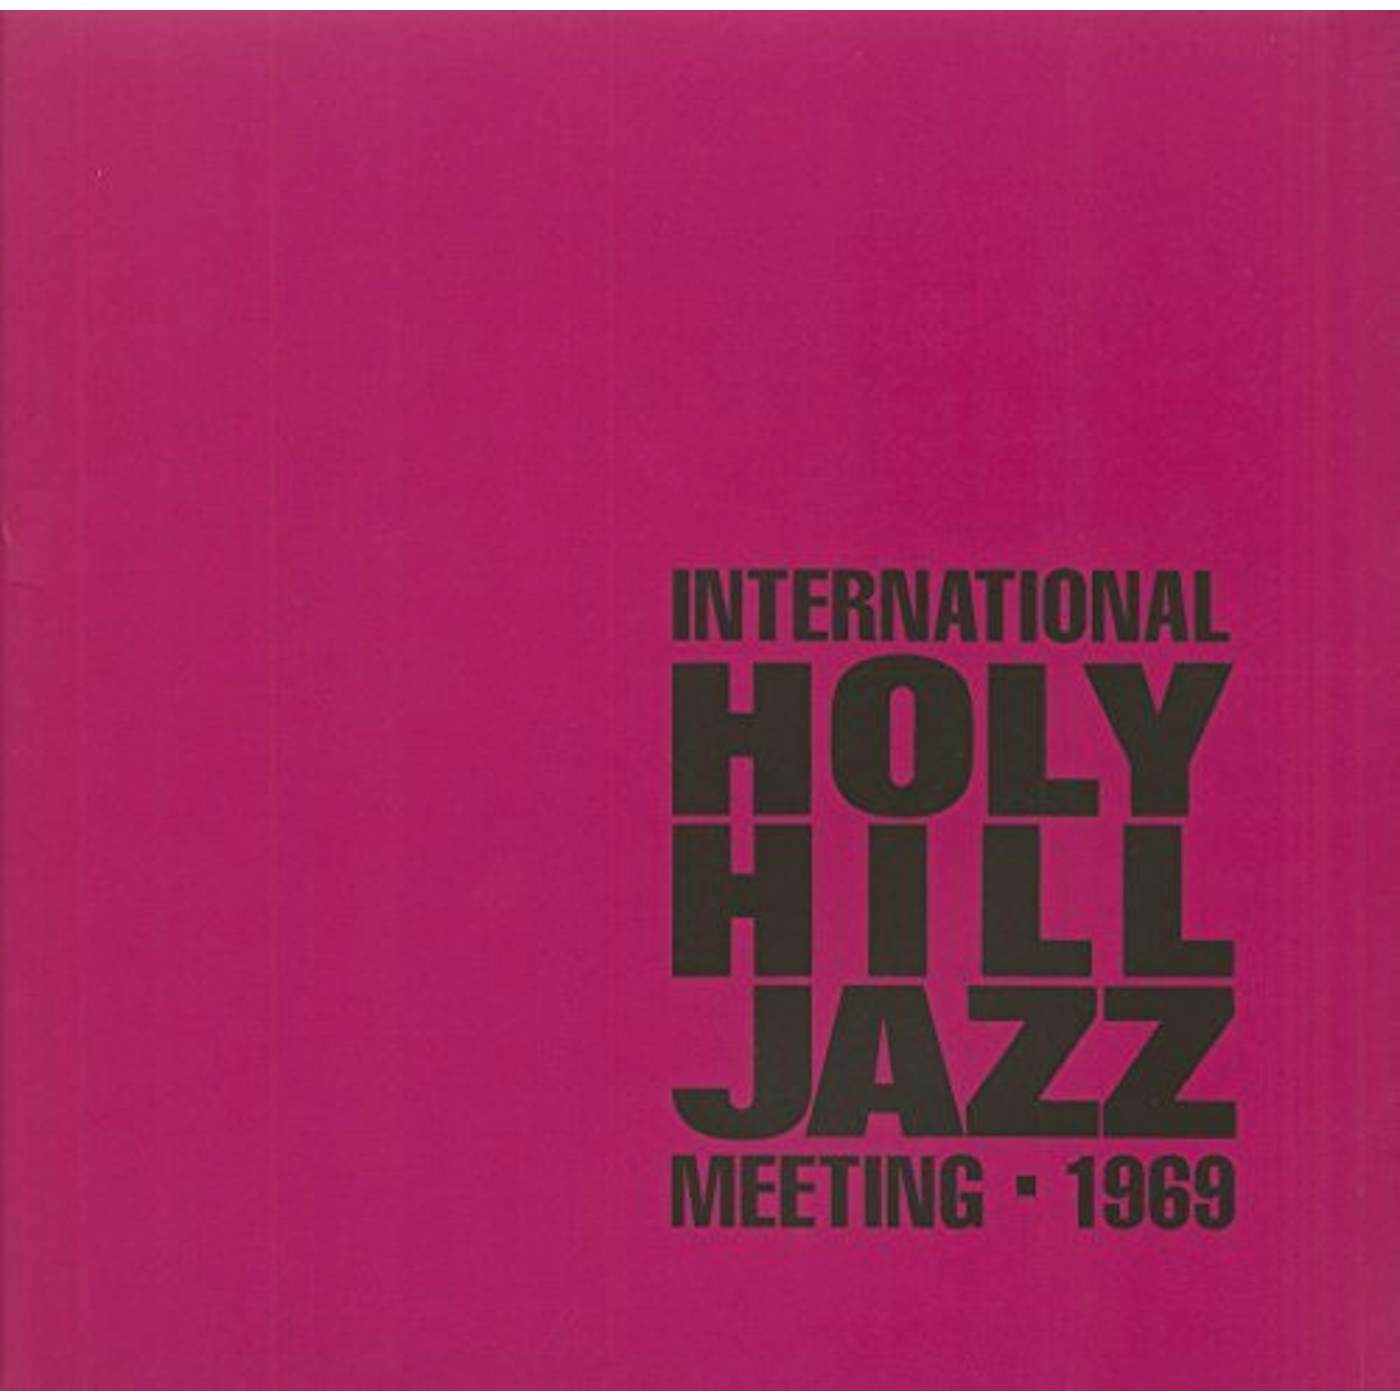 INTERNATIONAL HOLY HILL JAZZ MEETING / VARIOUS Vinyl Record